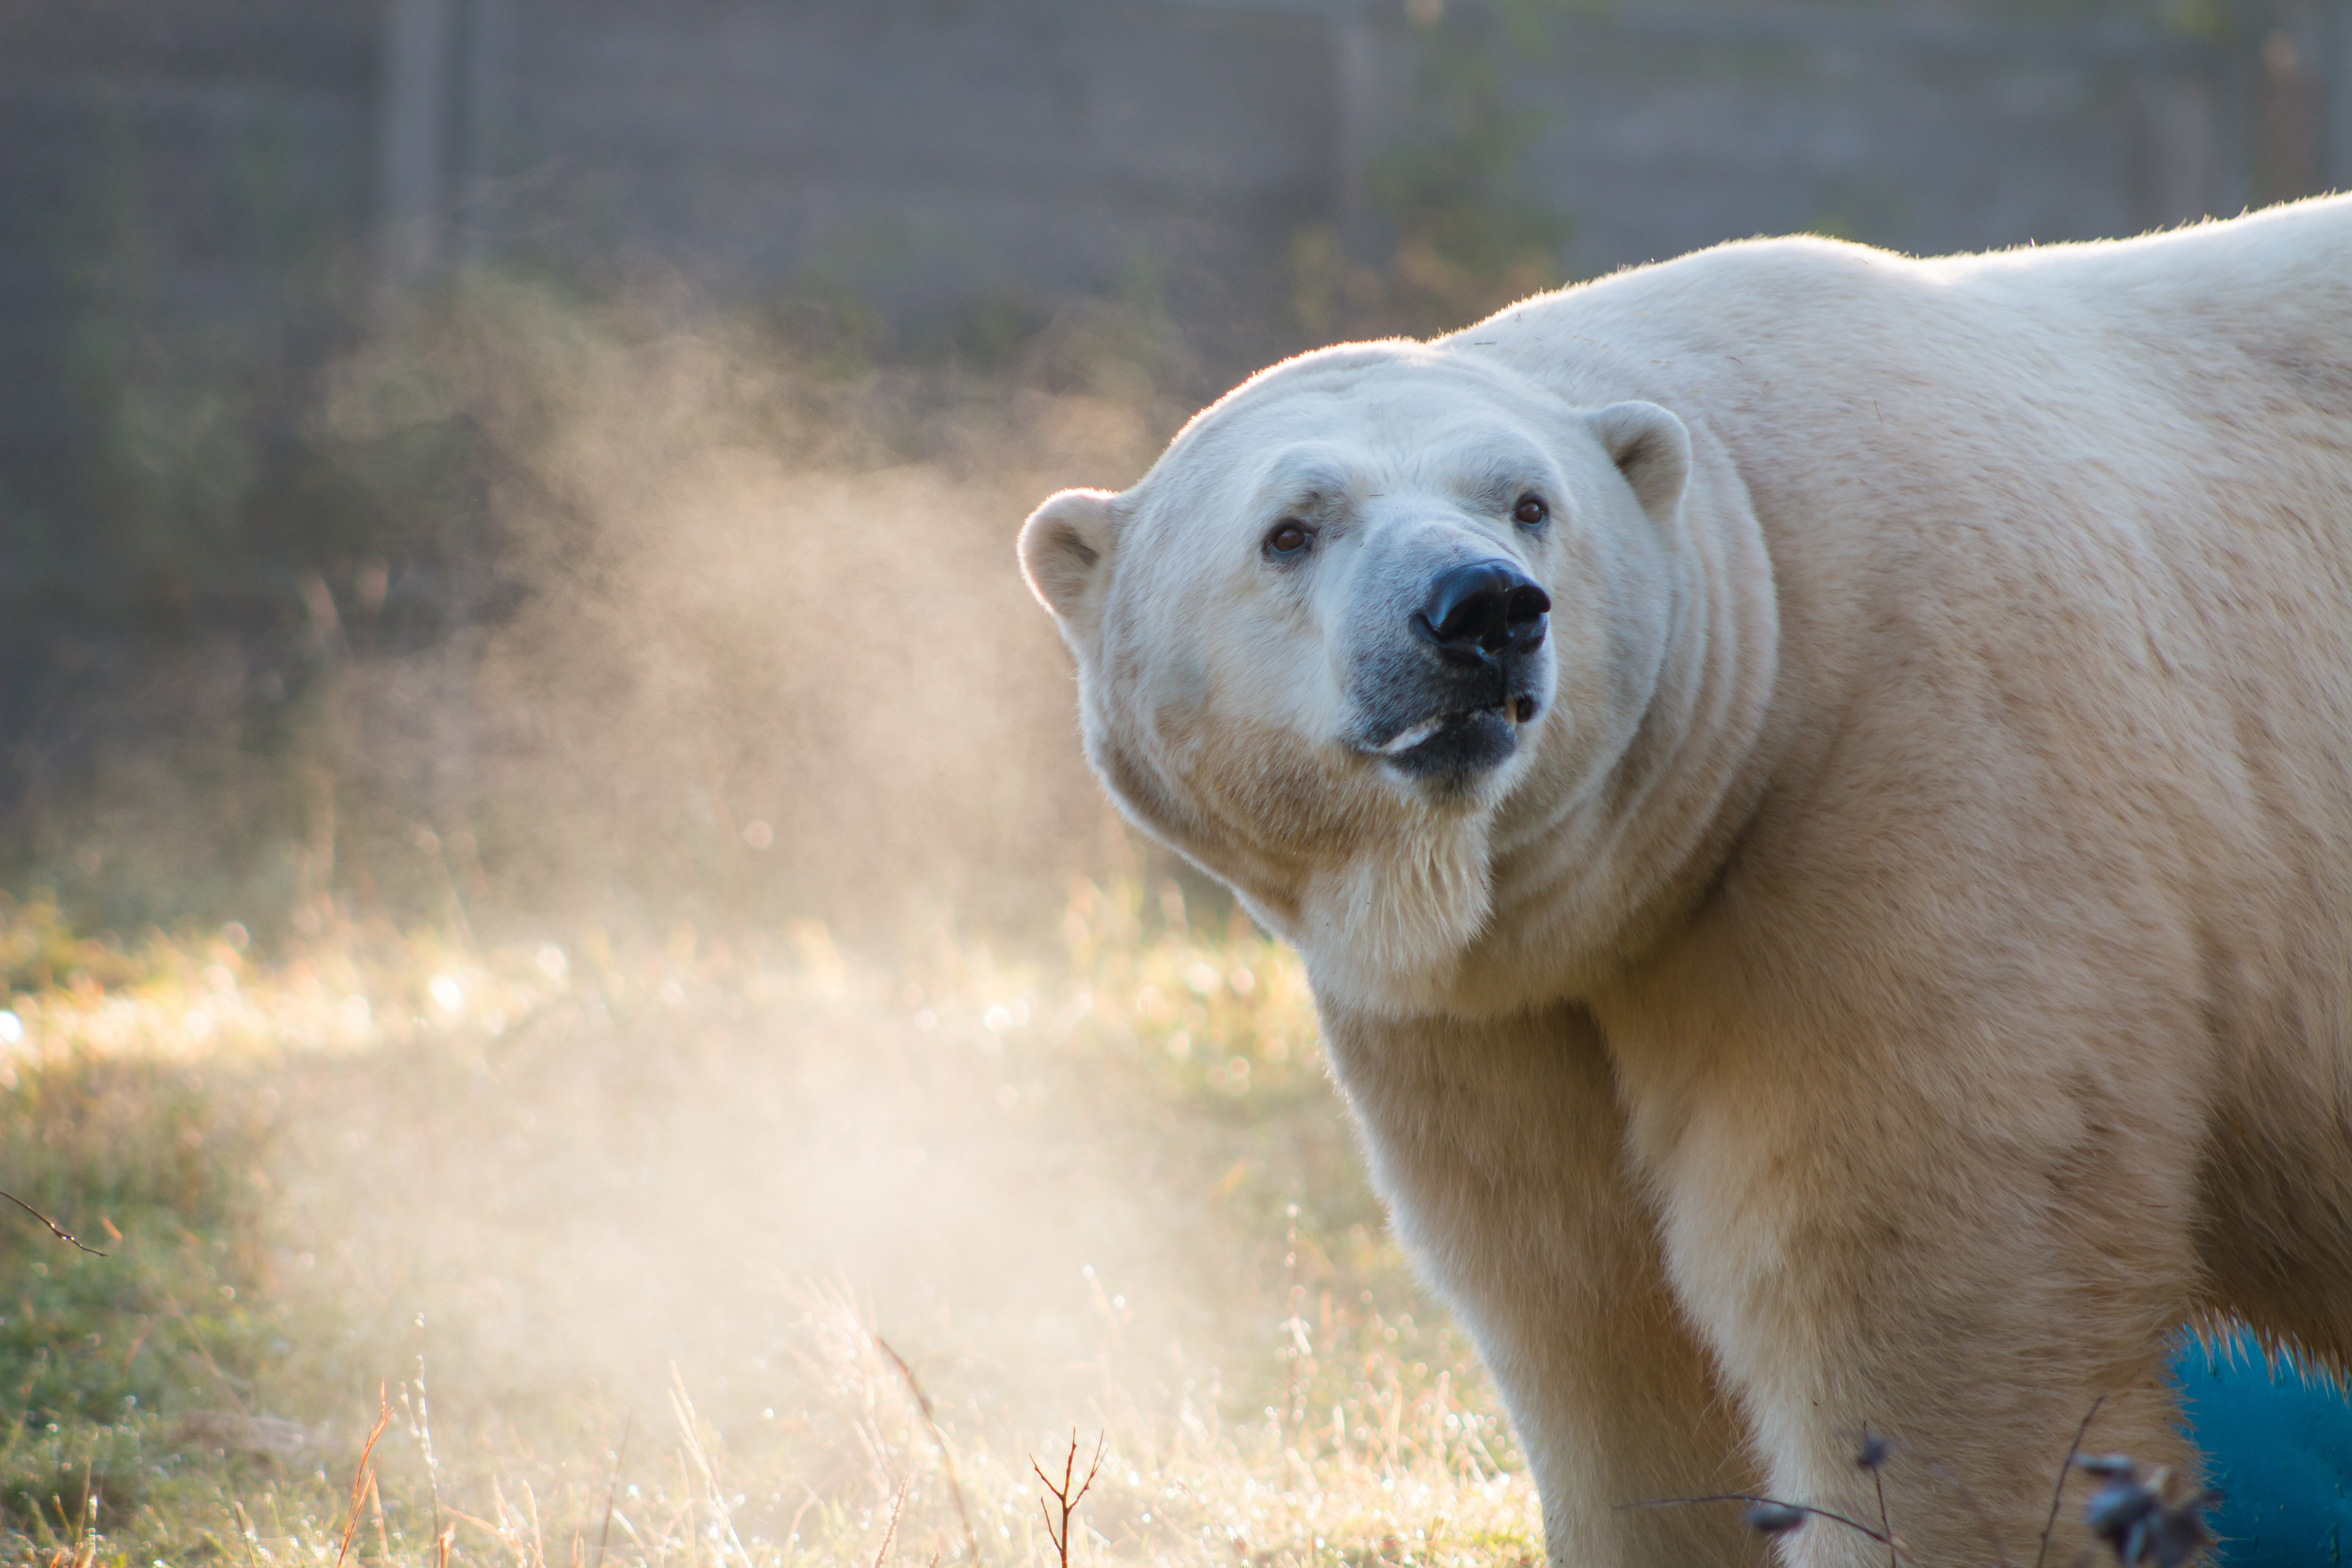 Meet the Bears: Visit the Polar Bear Habitat in Cochrane, Ontario